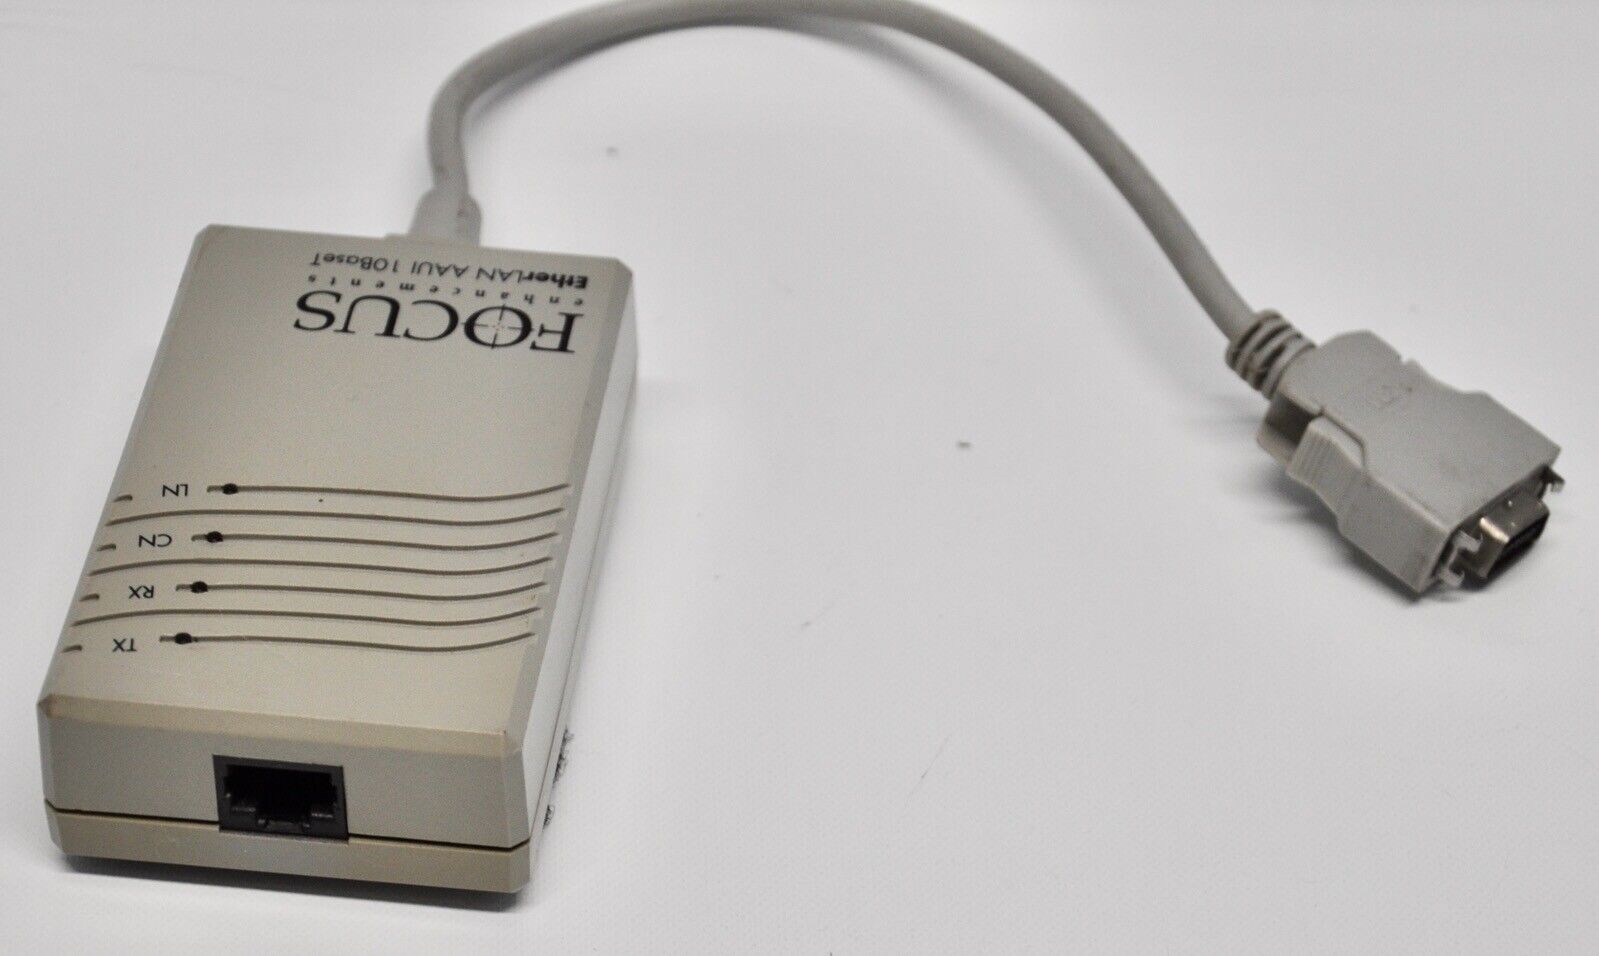 Vintage Network: Used Focus Ethernet Connector